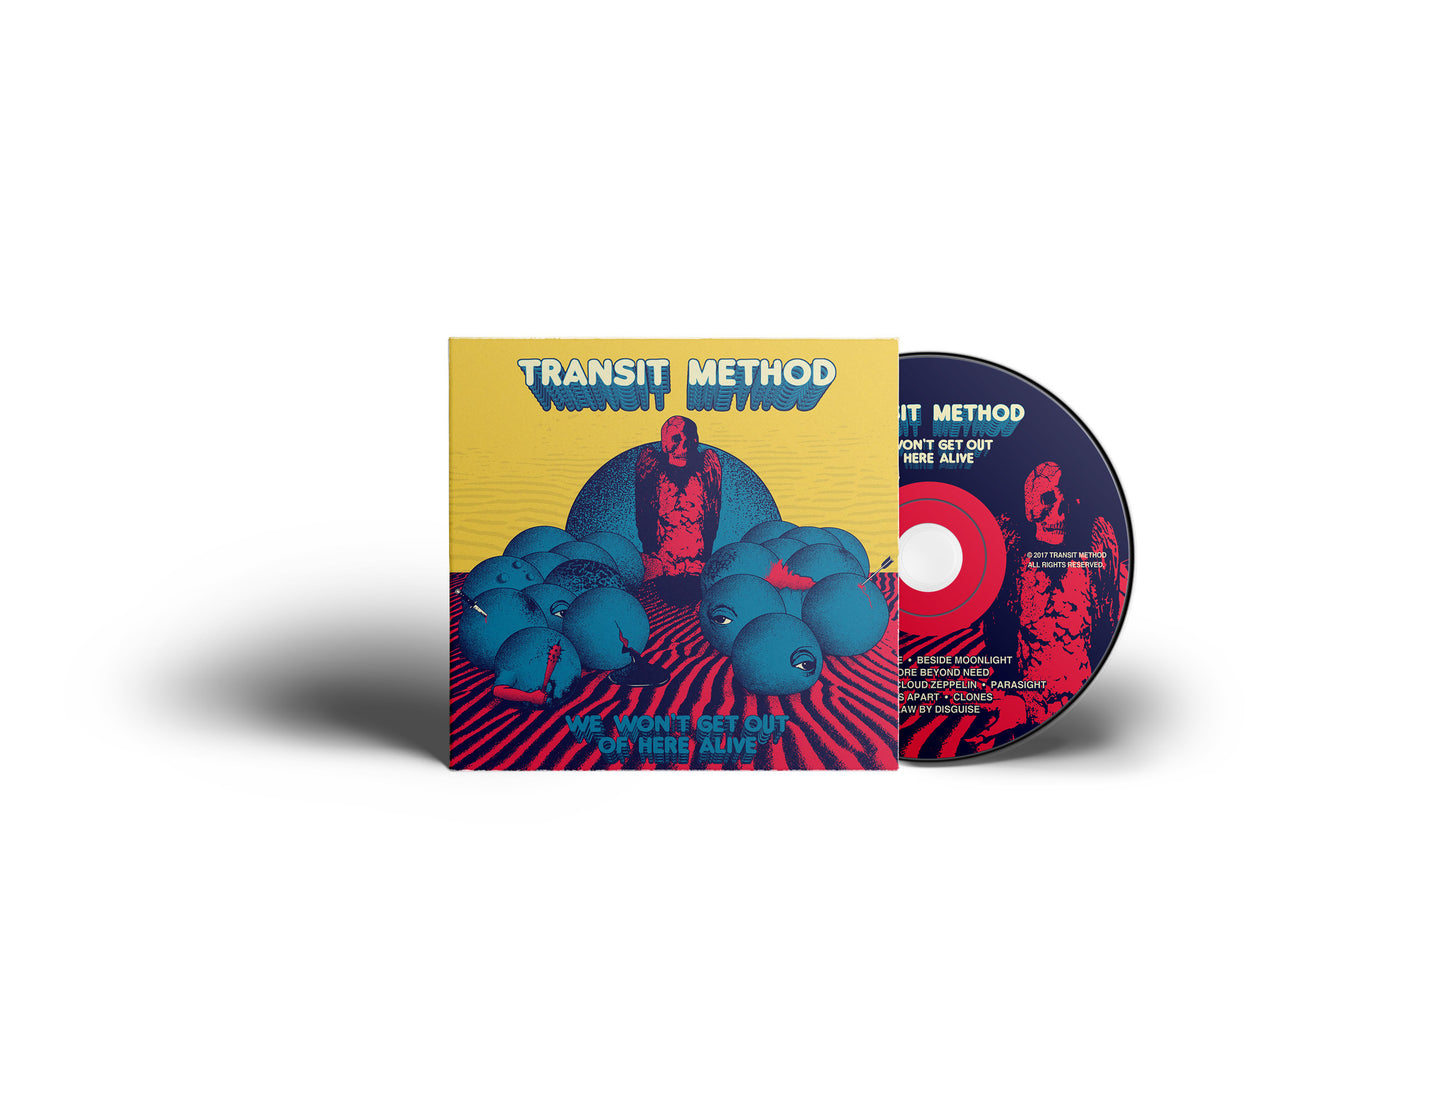 TRANSIT METHOD - We Won't Get Out Of Here Alive 12" Vinyl LP